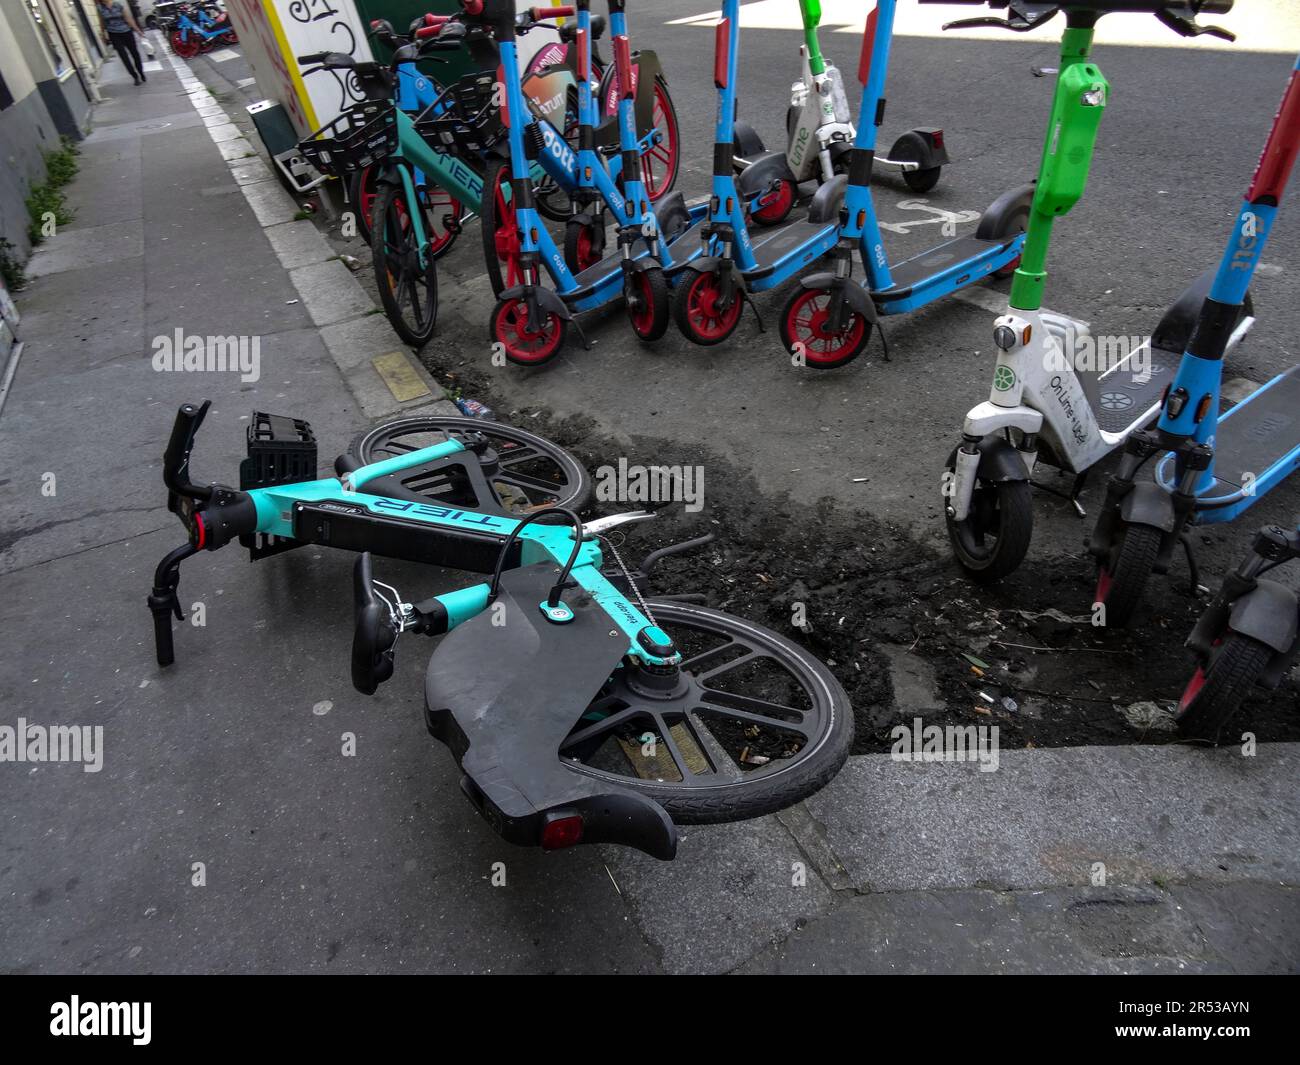 Paris hire bikes strewn across the pavement Stock Photo